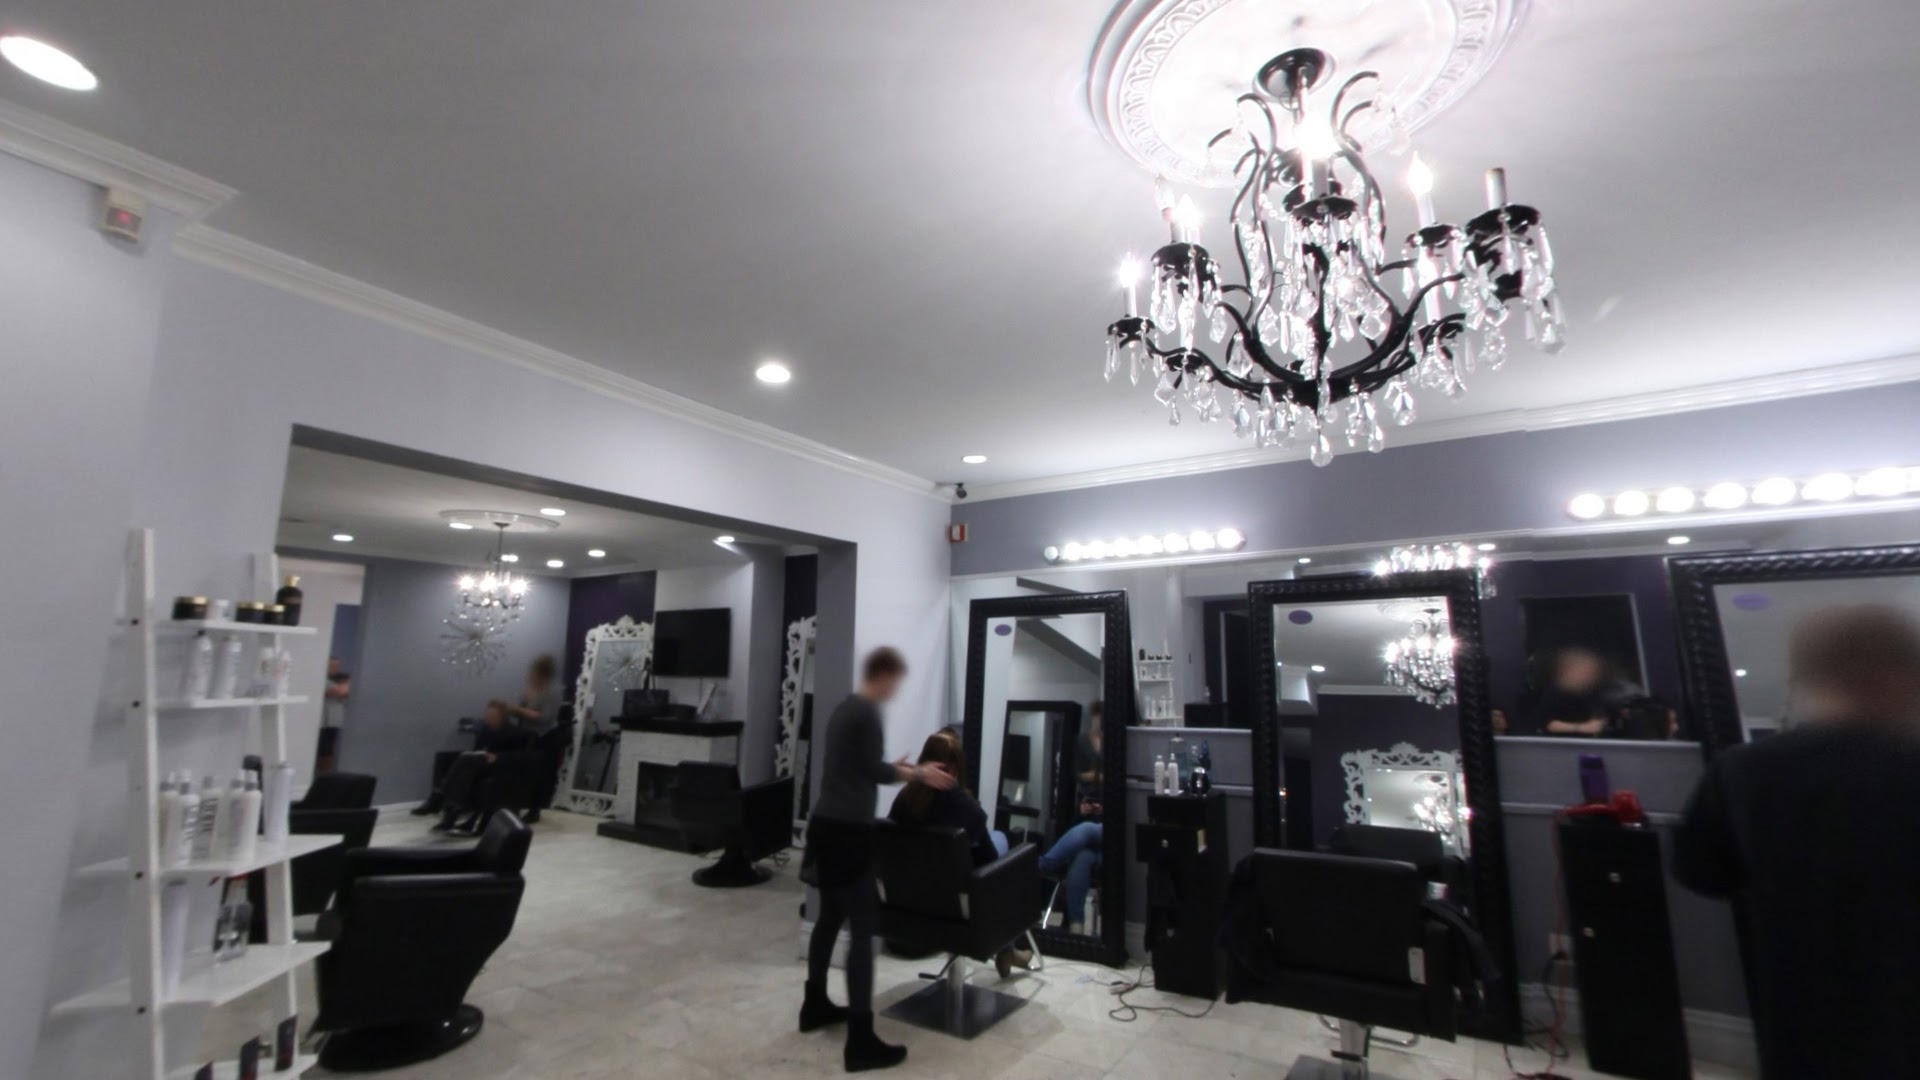 The Originals Salon | Hair salon in Ridgewood, NJ